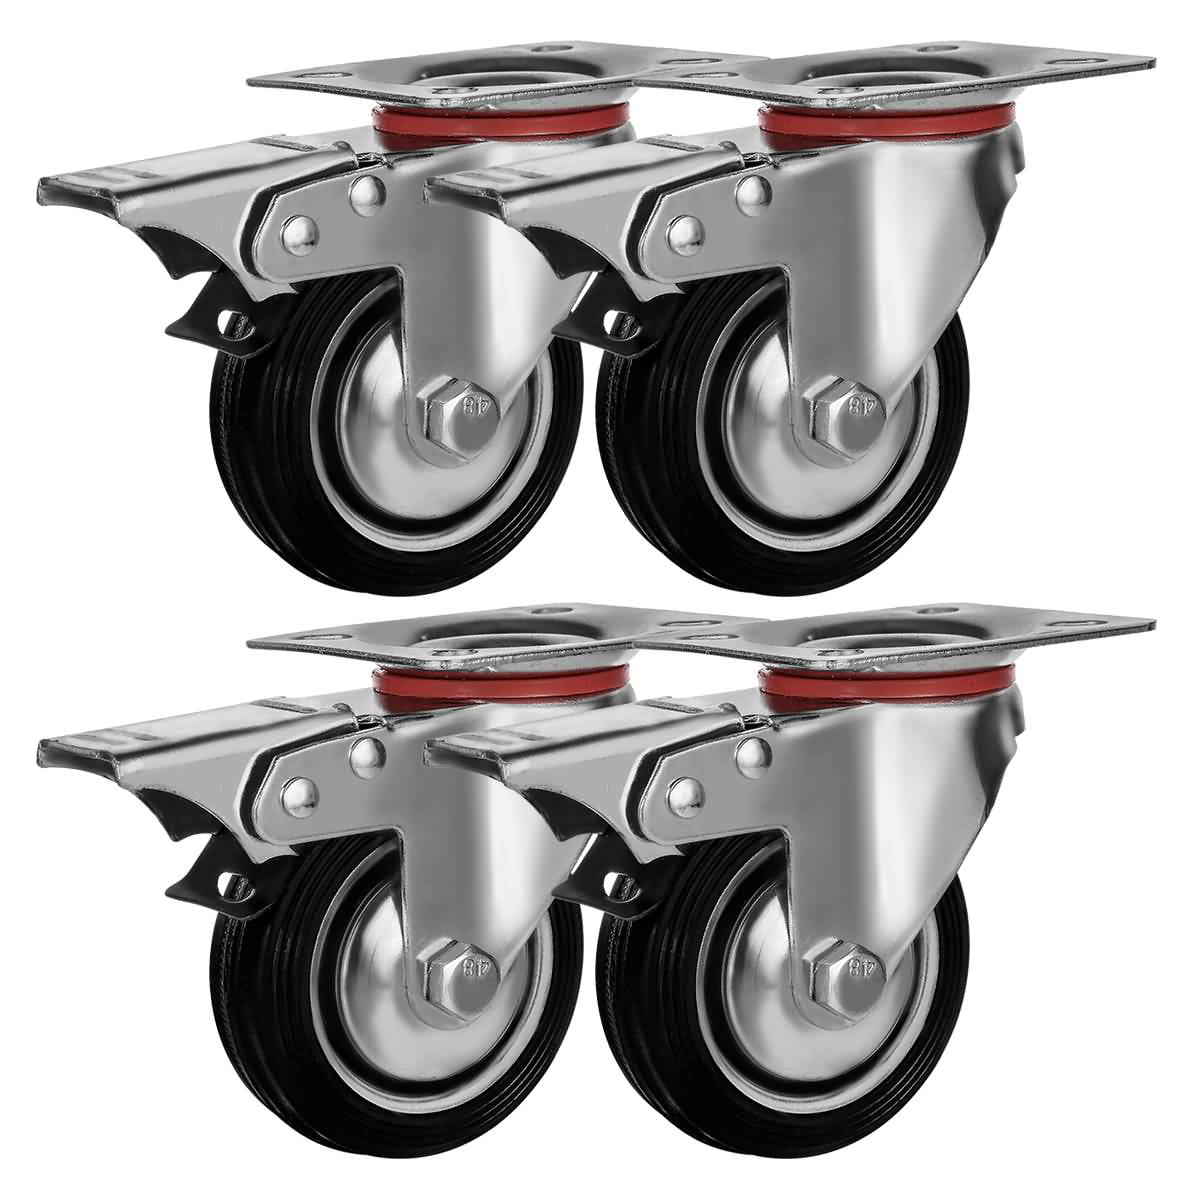 Swivel Castors with Brakes Wheels Trolley Furniture 4 Pack 3 Inch 75mm Swivel 